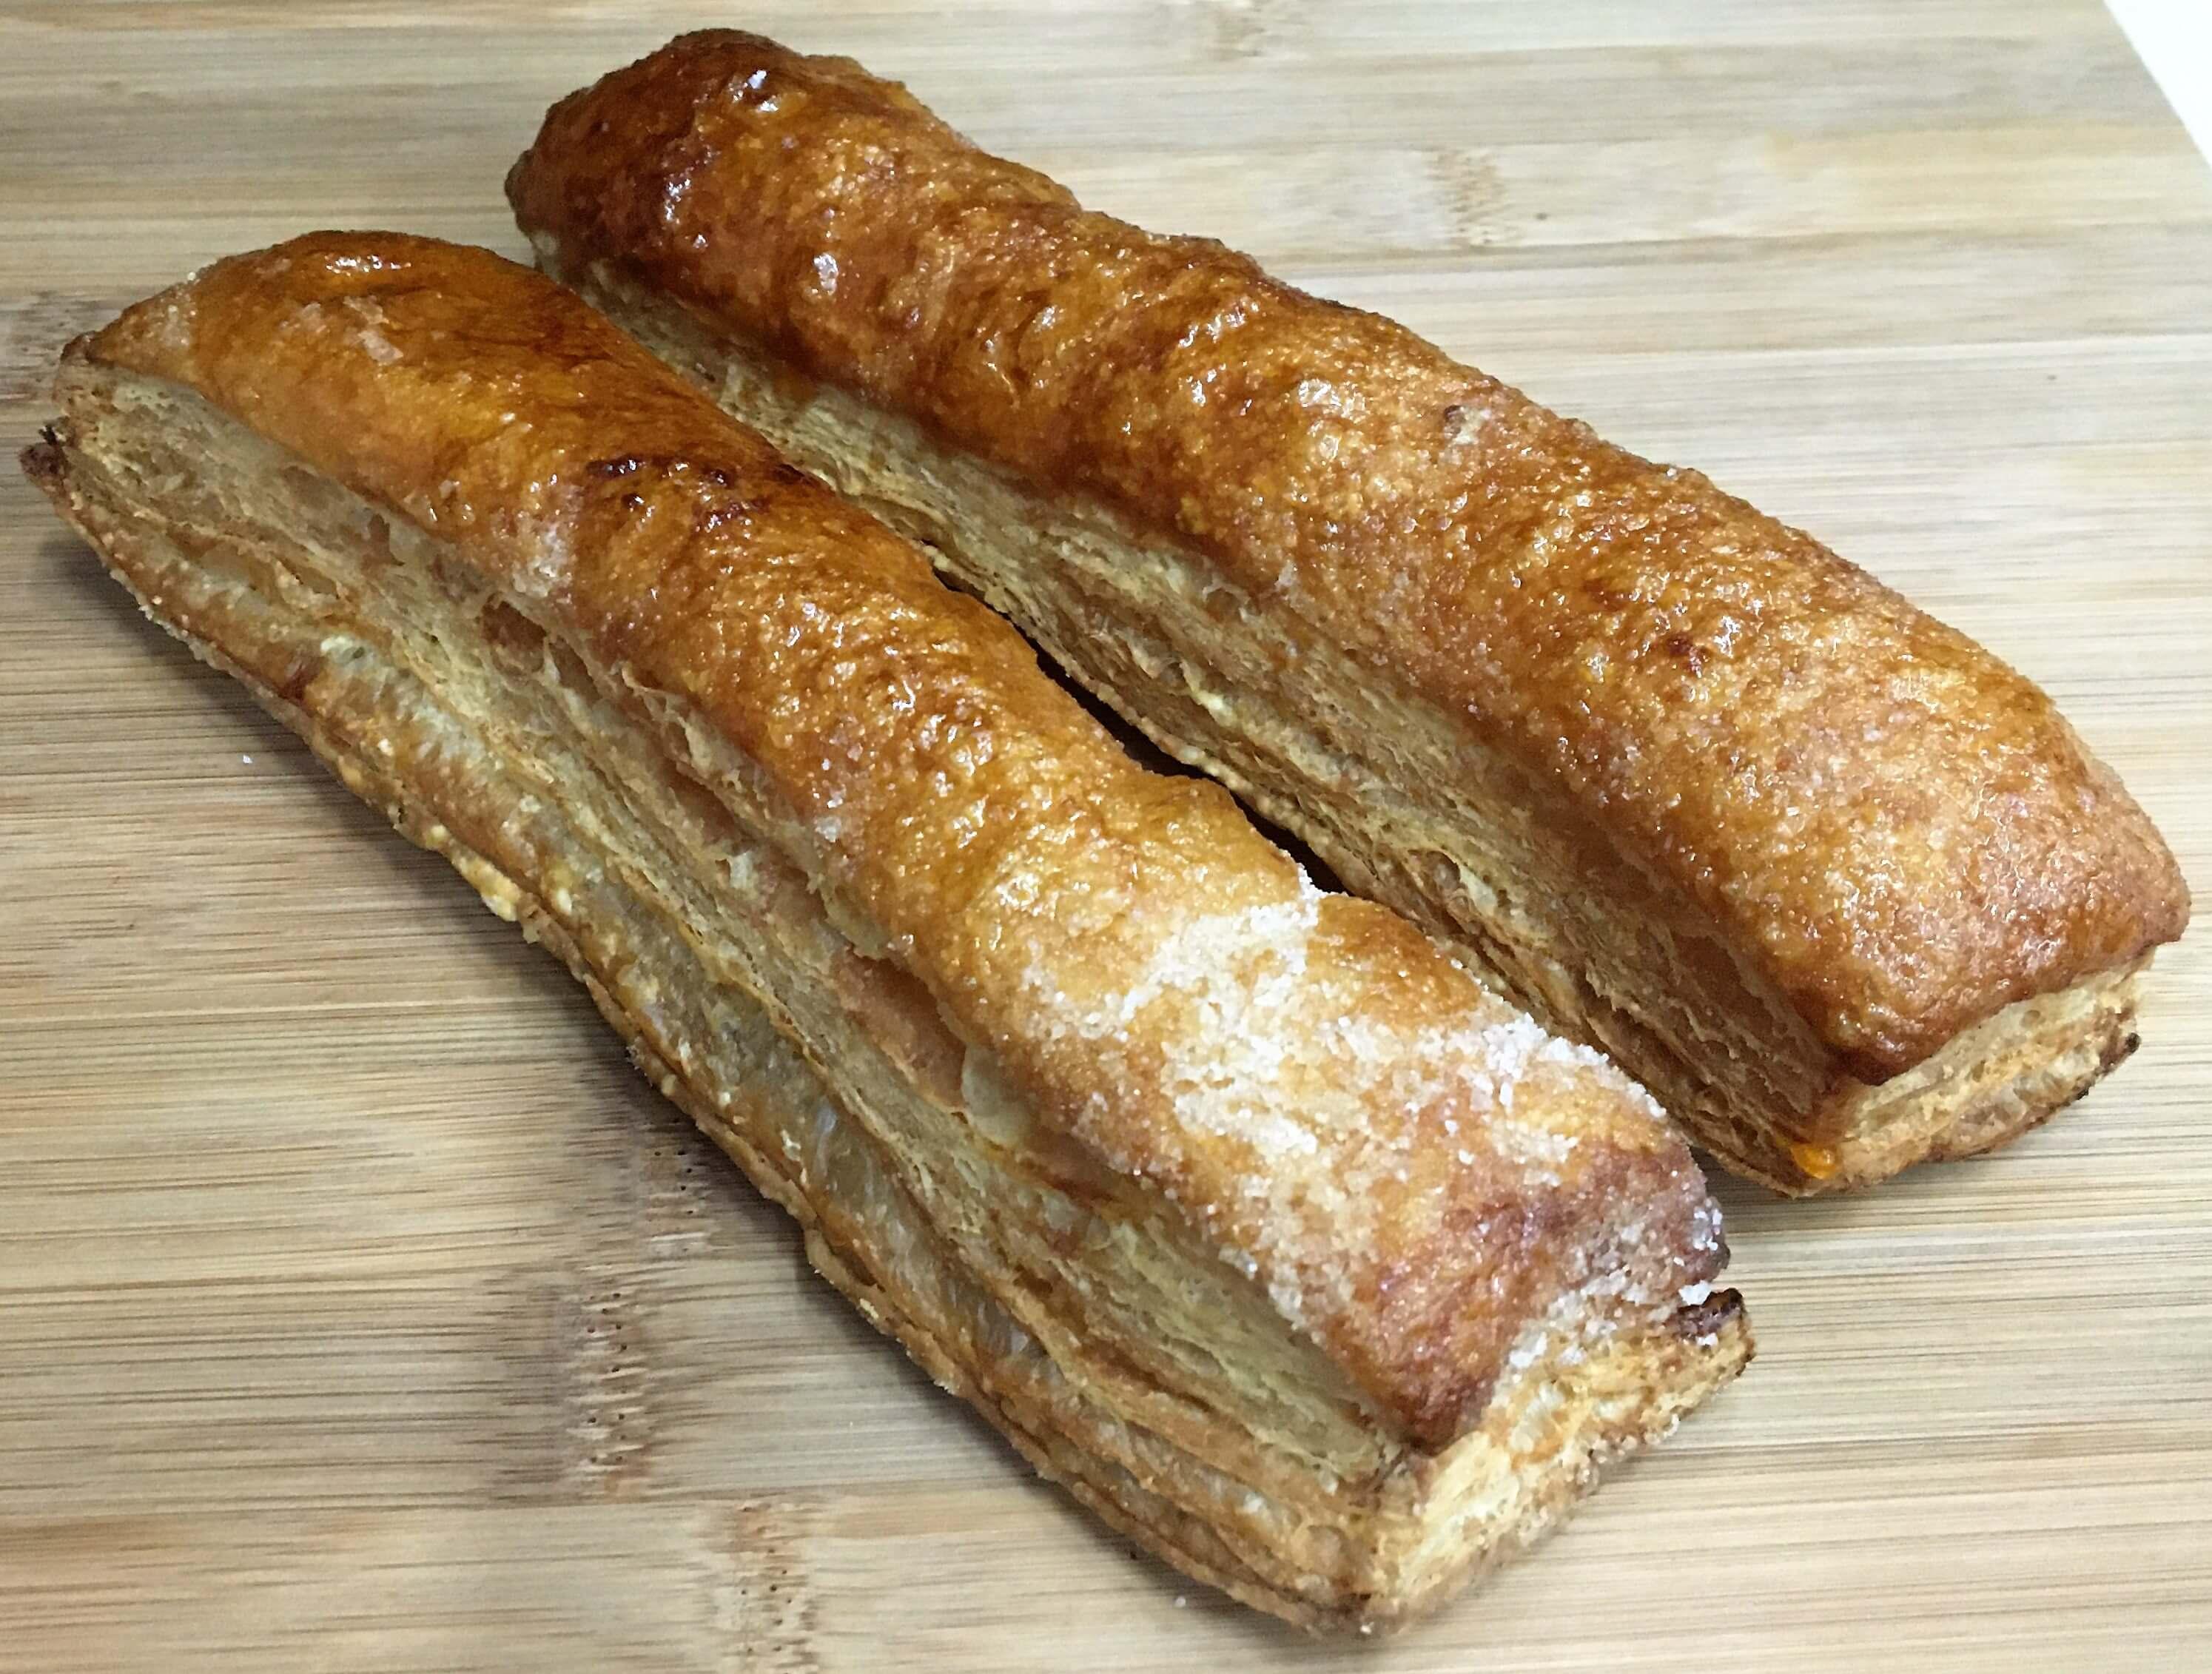 Moroleon Bakery - Puff Pastry Bread